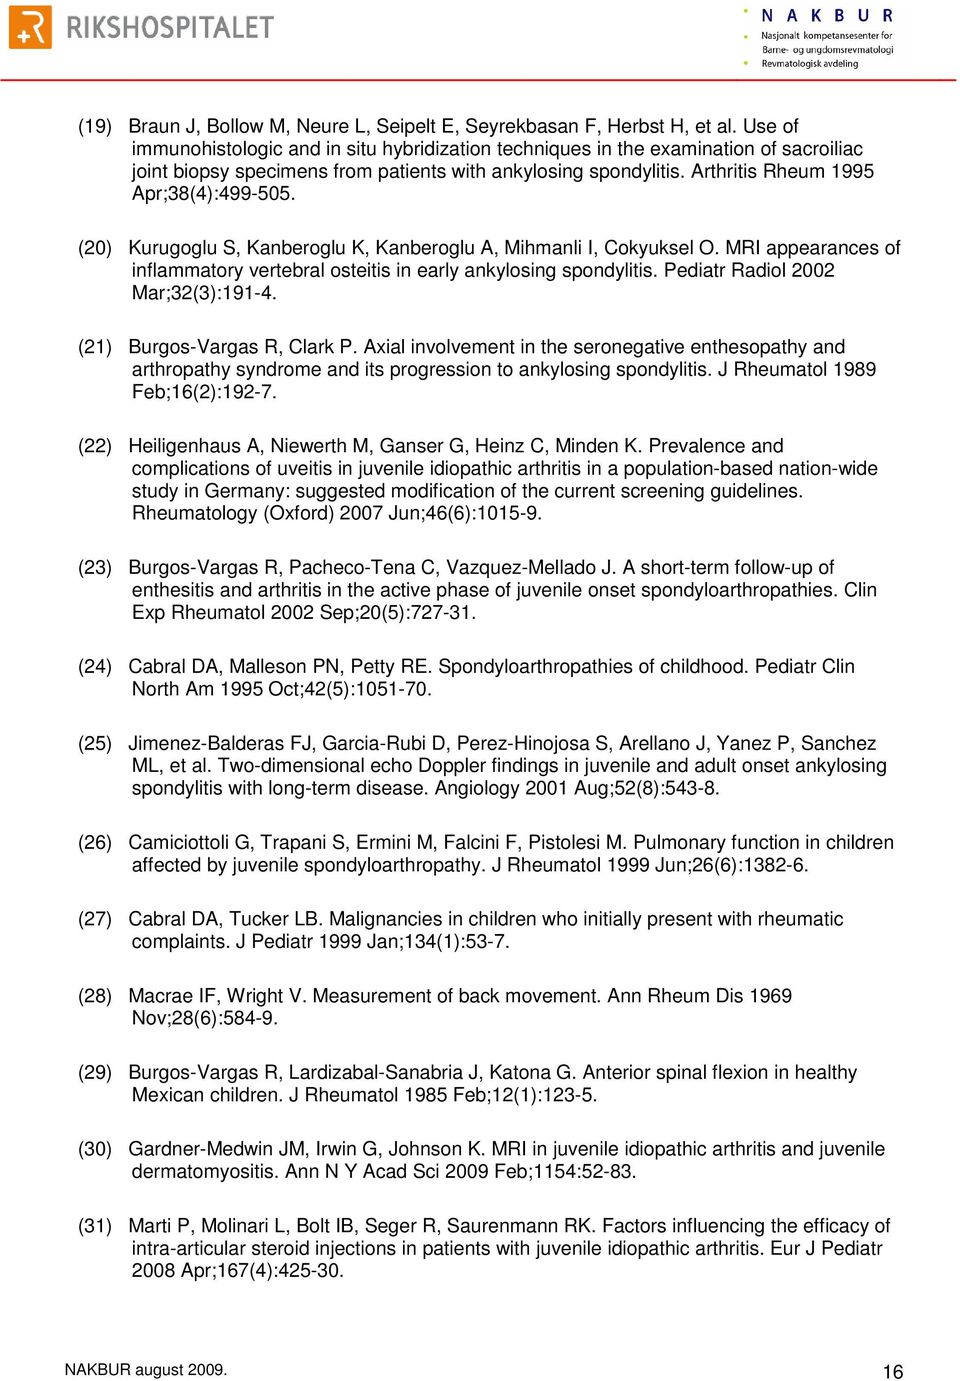 (20) Kurugoglu S, Kanberoglu K, Kanberoglu A, Mihmanli I, Cokyuksel O. MRI appearances of inflammatory vertebral osteitis in early ankylosing spondylitis. Pediatr Radiol 2002 Mar;32(3):191-4.